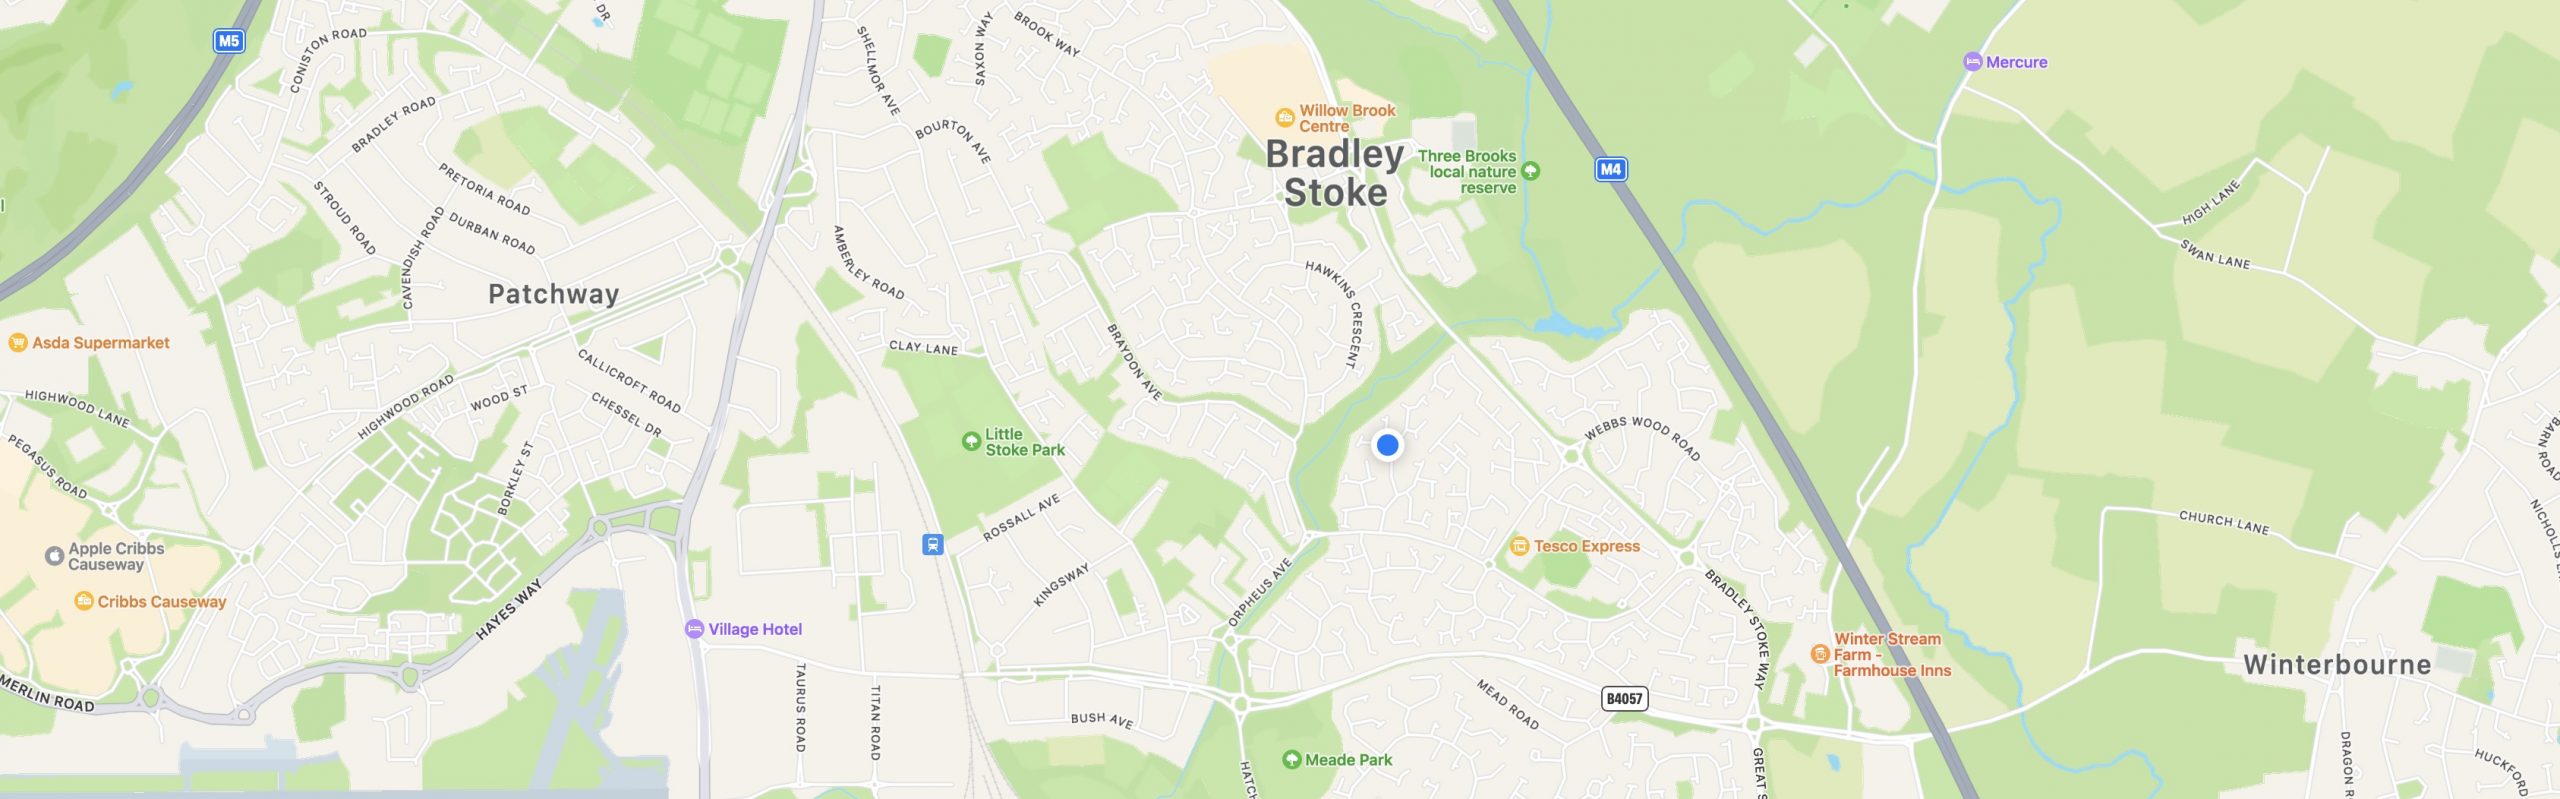 Location Map of Cloud IT Solutions in Bradley Stoke, Bristol